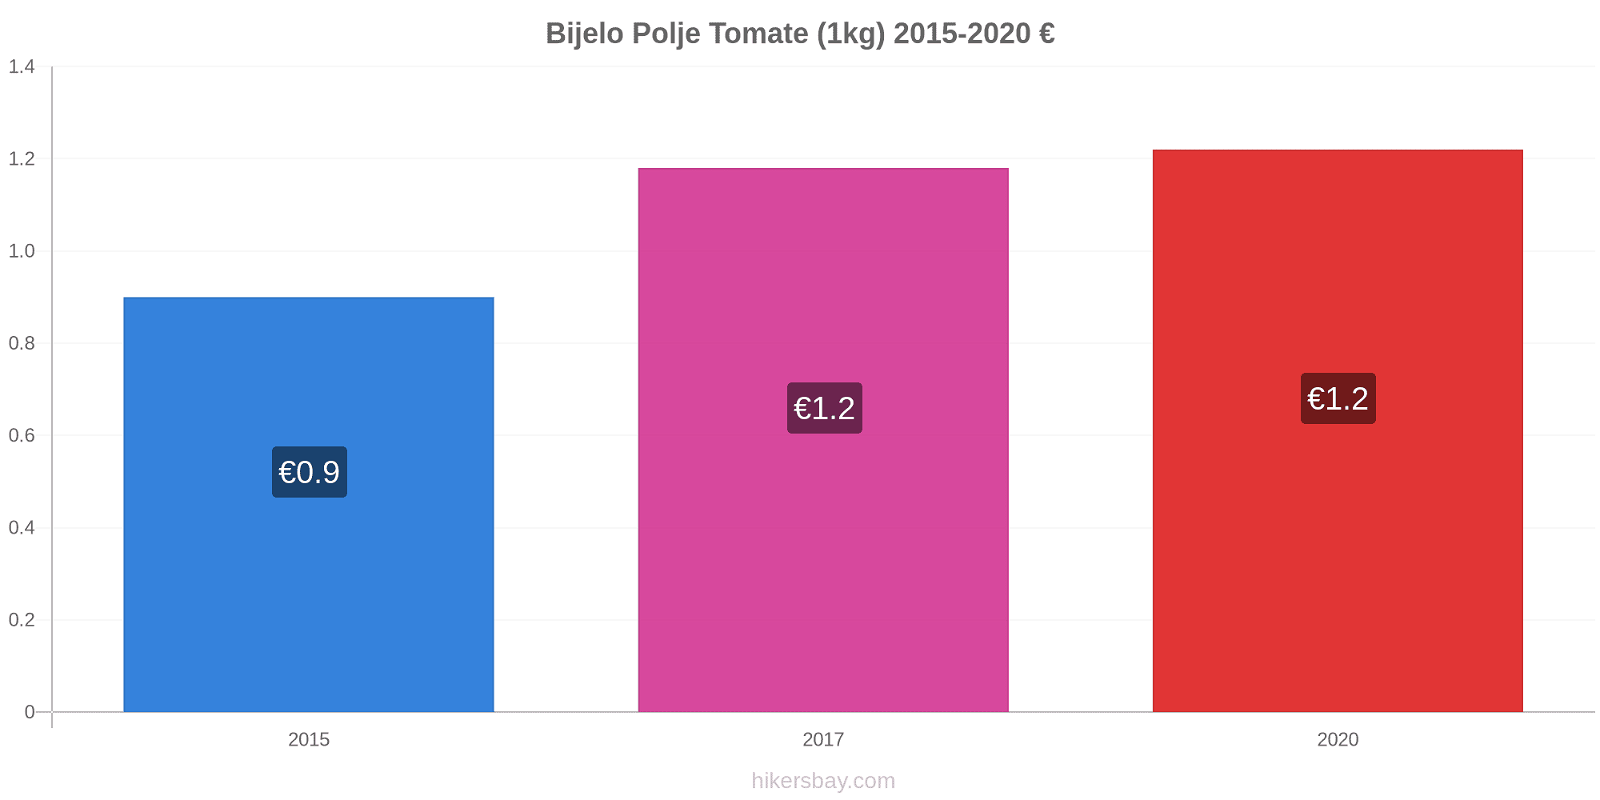 Bijelo Polje changements de prix Tomate (1kg) hikersbay.com